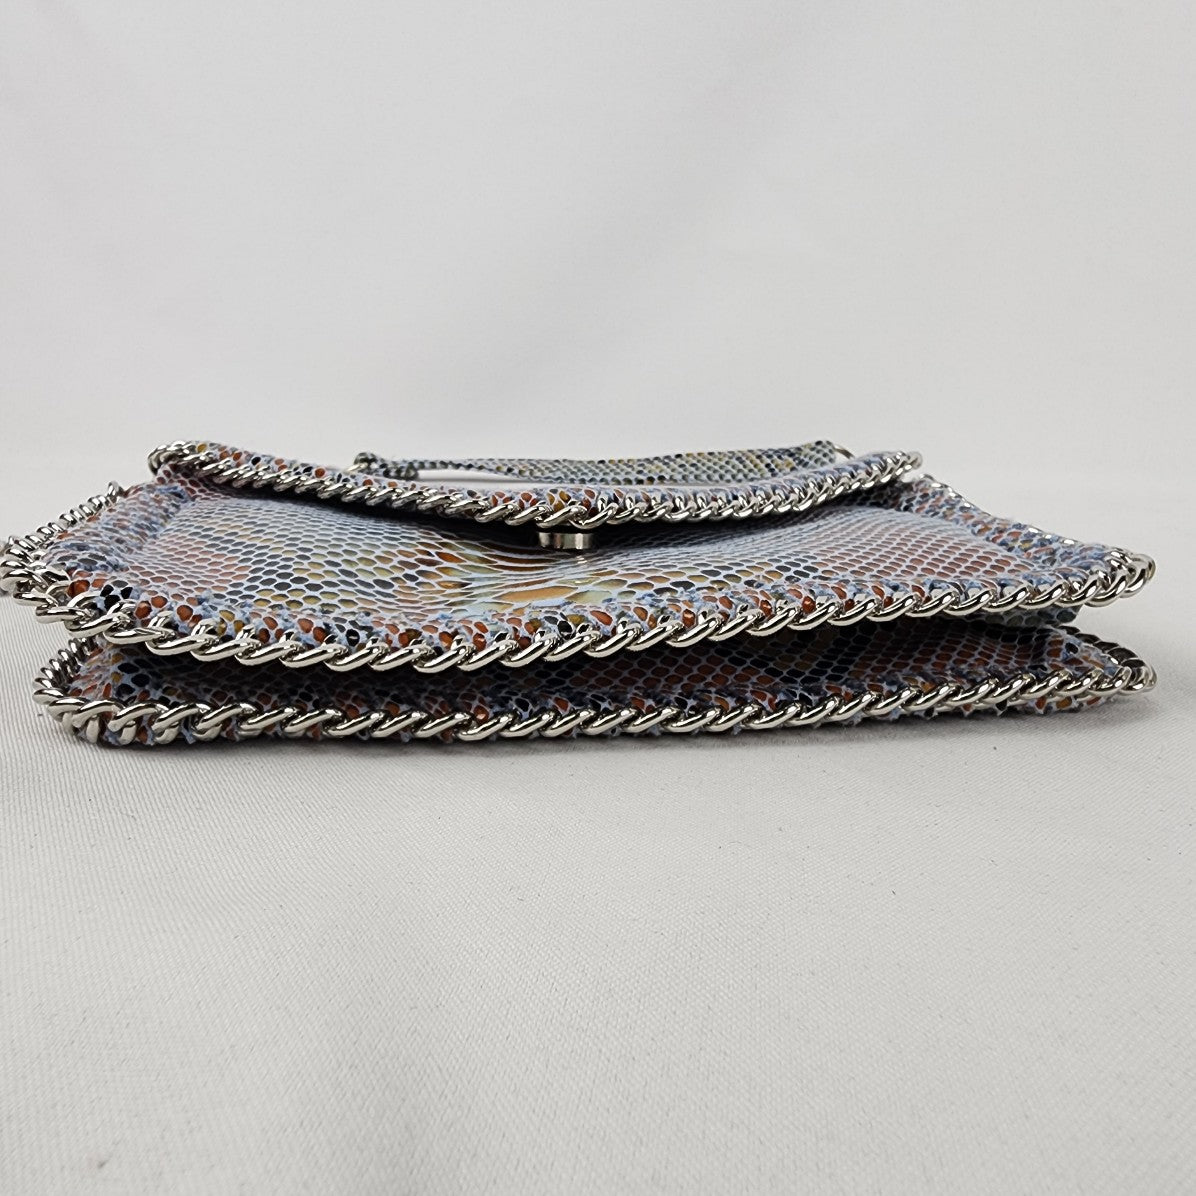 Sondra Roberts Reptile Print Leather Chain Detail Shoulder Clutch Purse